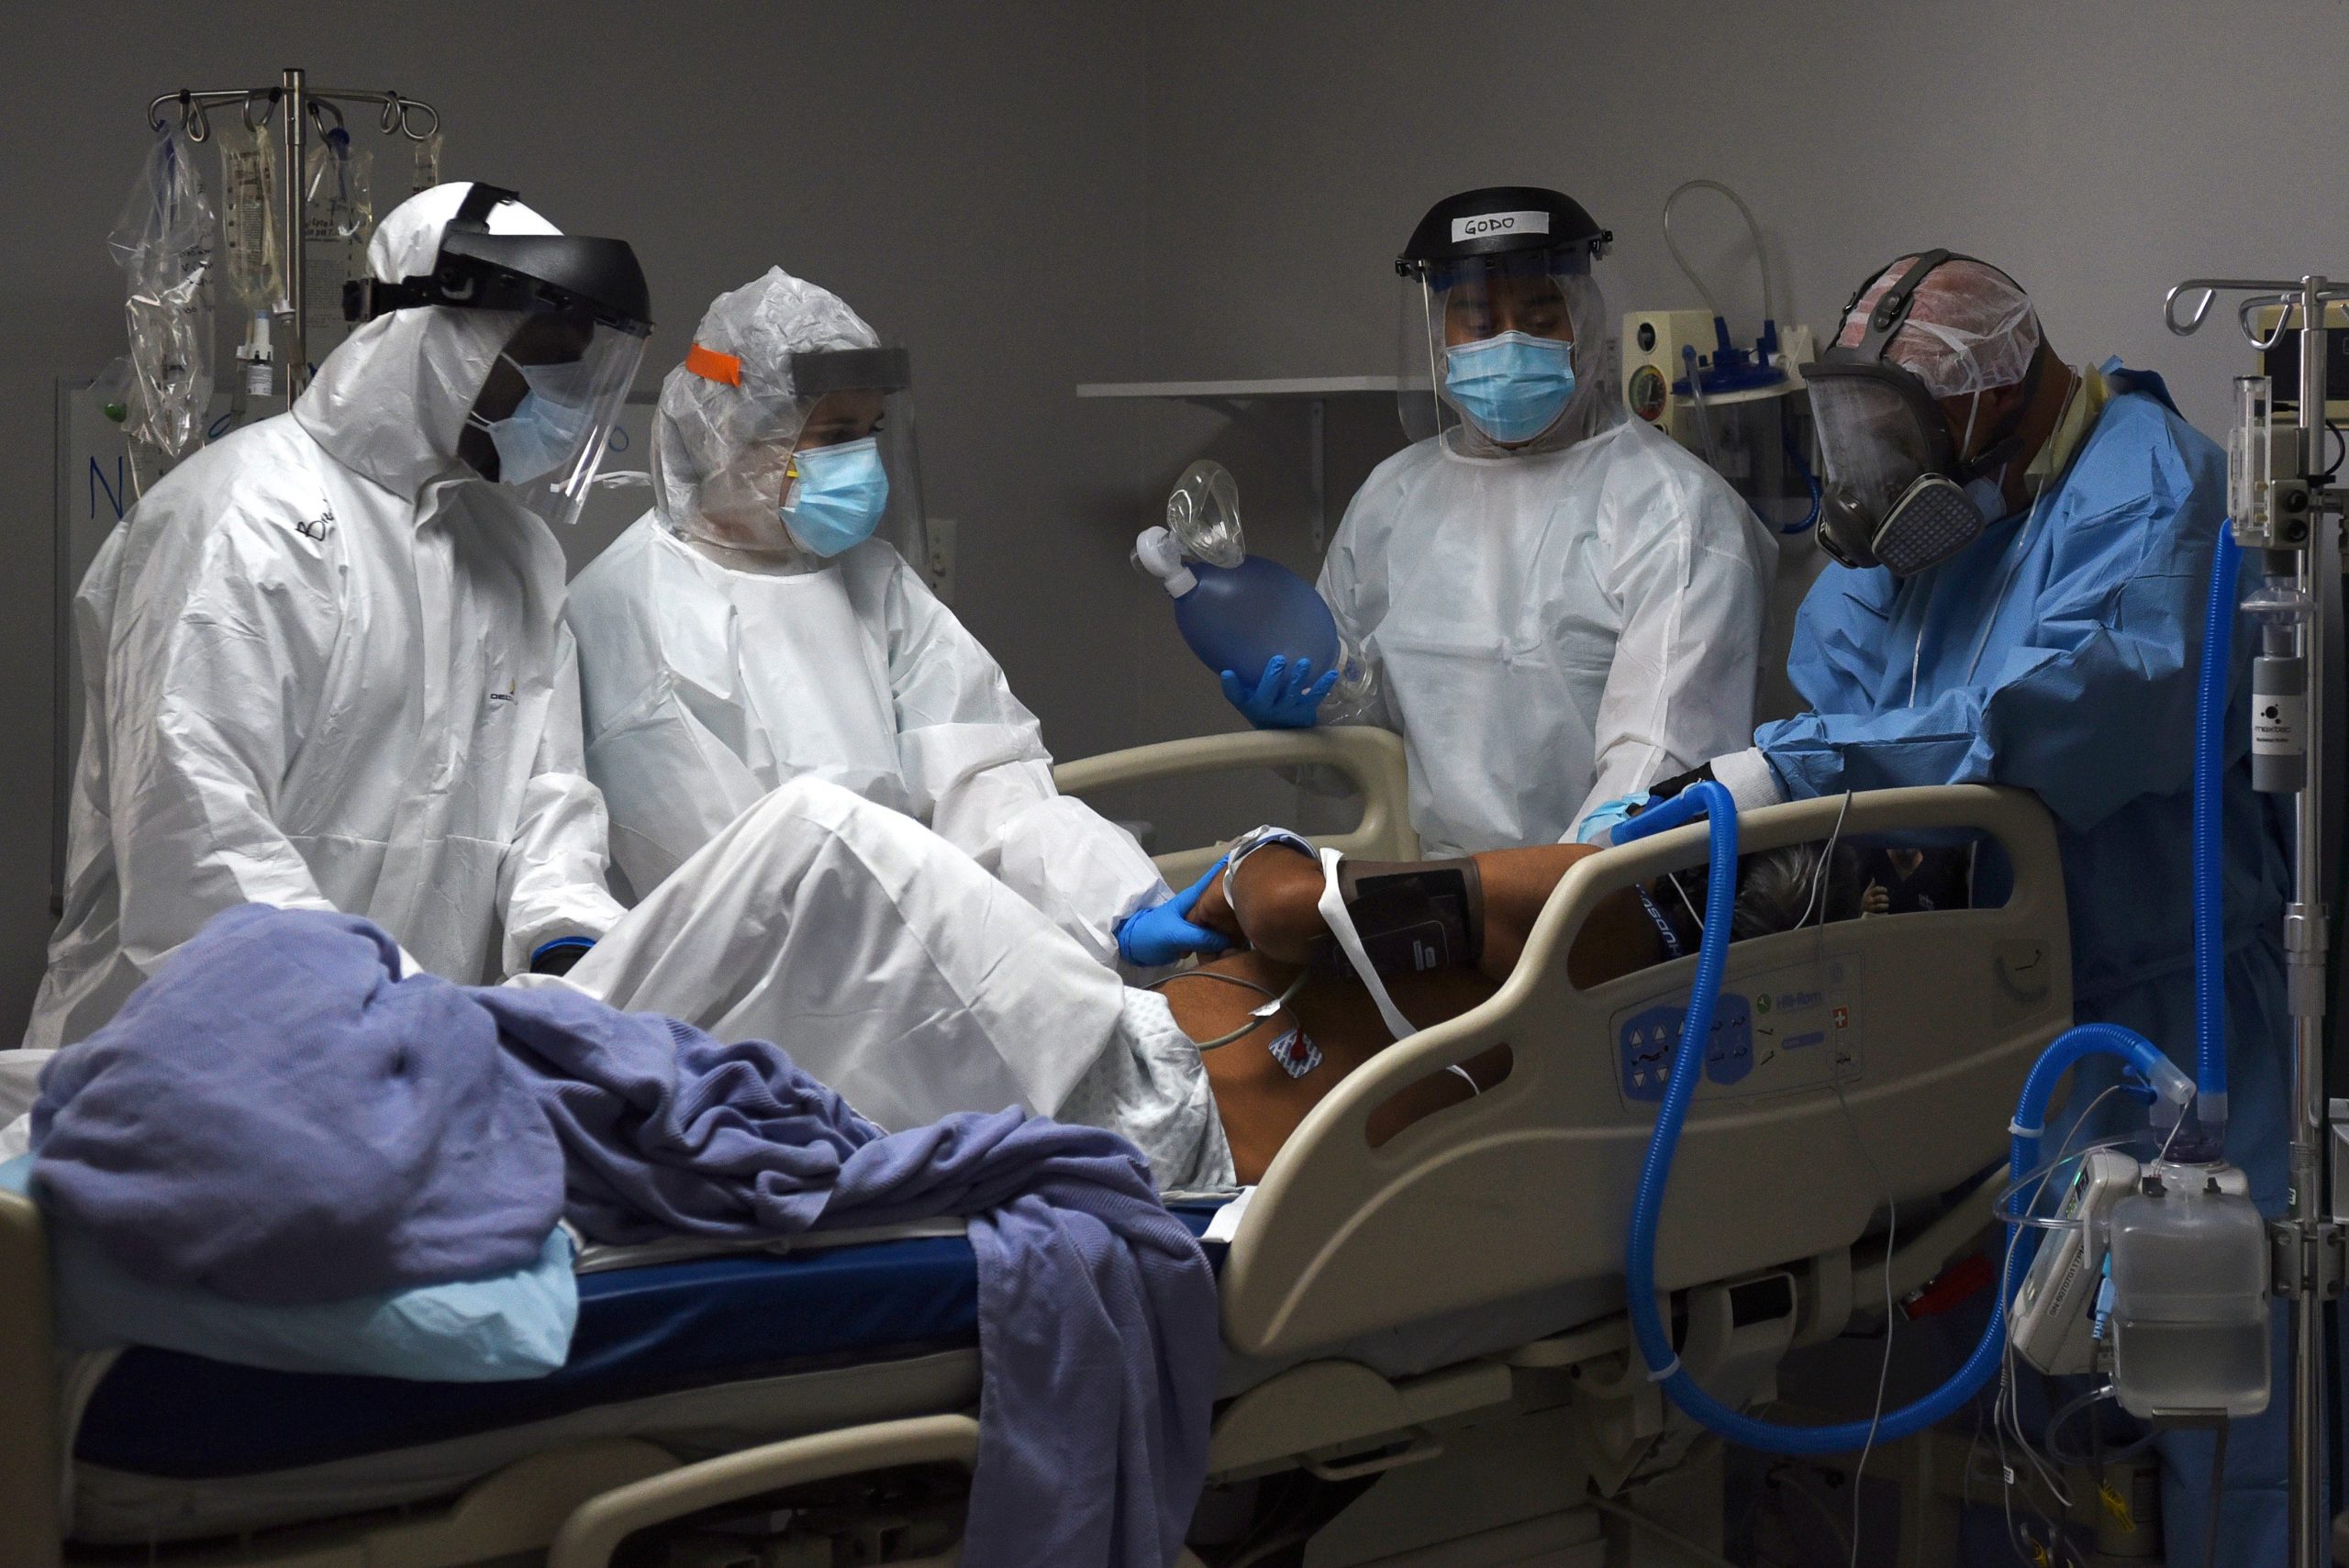 FILE PHOTO: Medical workers prepare to intubate a coronavirus disease (COVID-19) patient at the United Memorial Medical Center's coronavirus disease (COVID-19) intensive care unit in Houston, Texas, U.S., June 29, 2020. REUTERS/Callaghan O'Hare